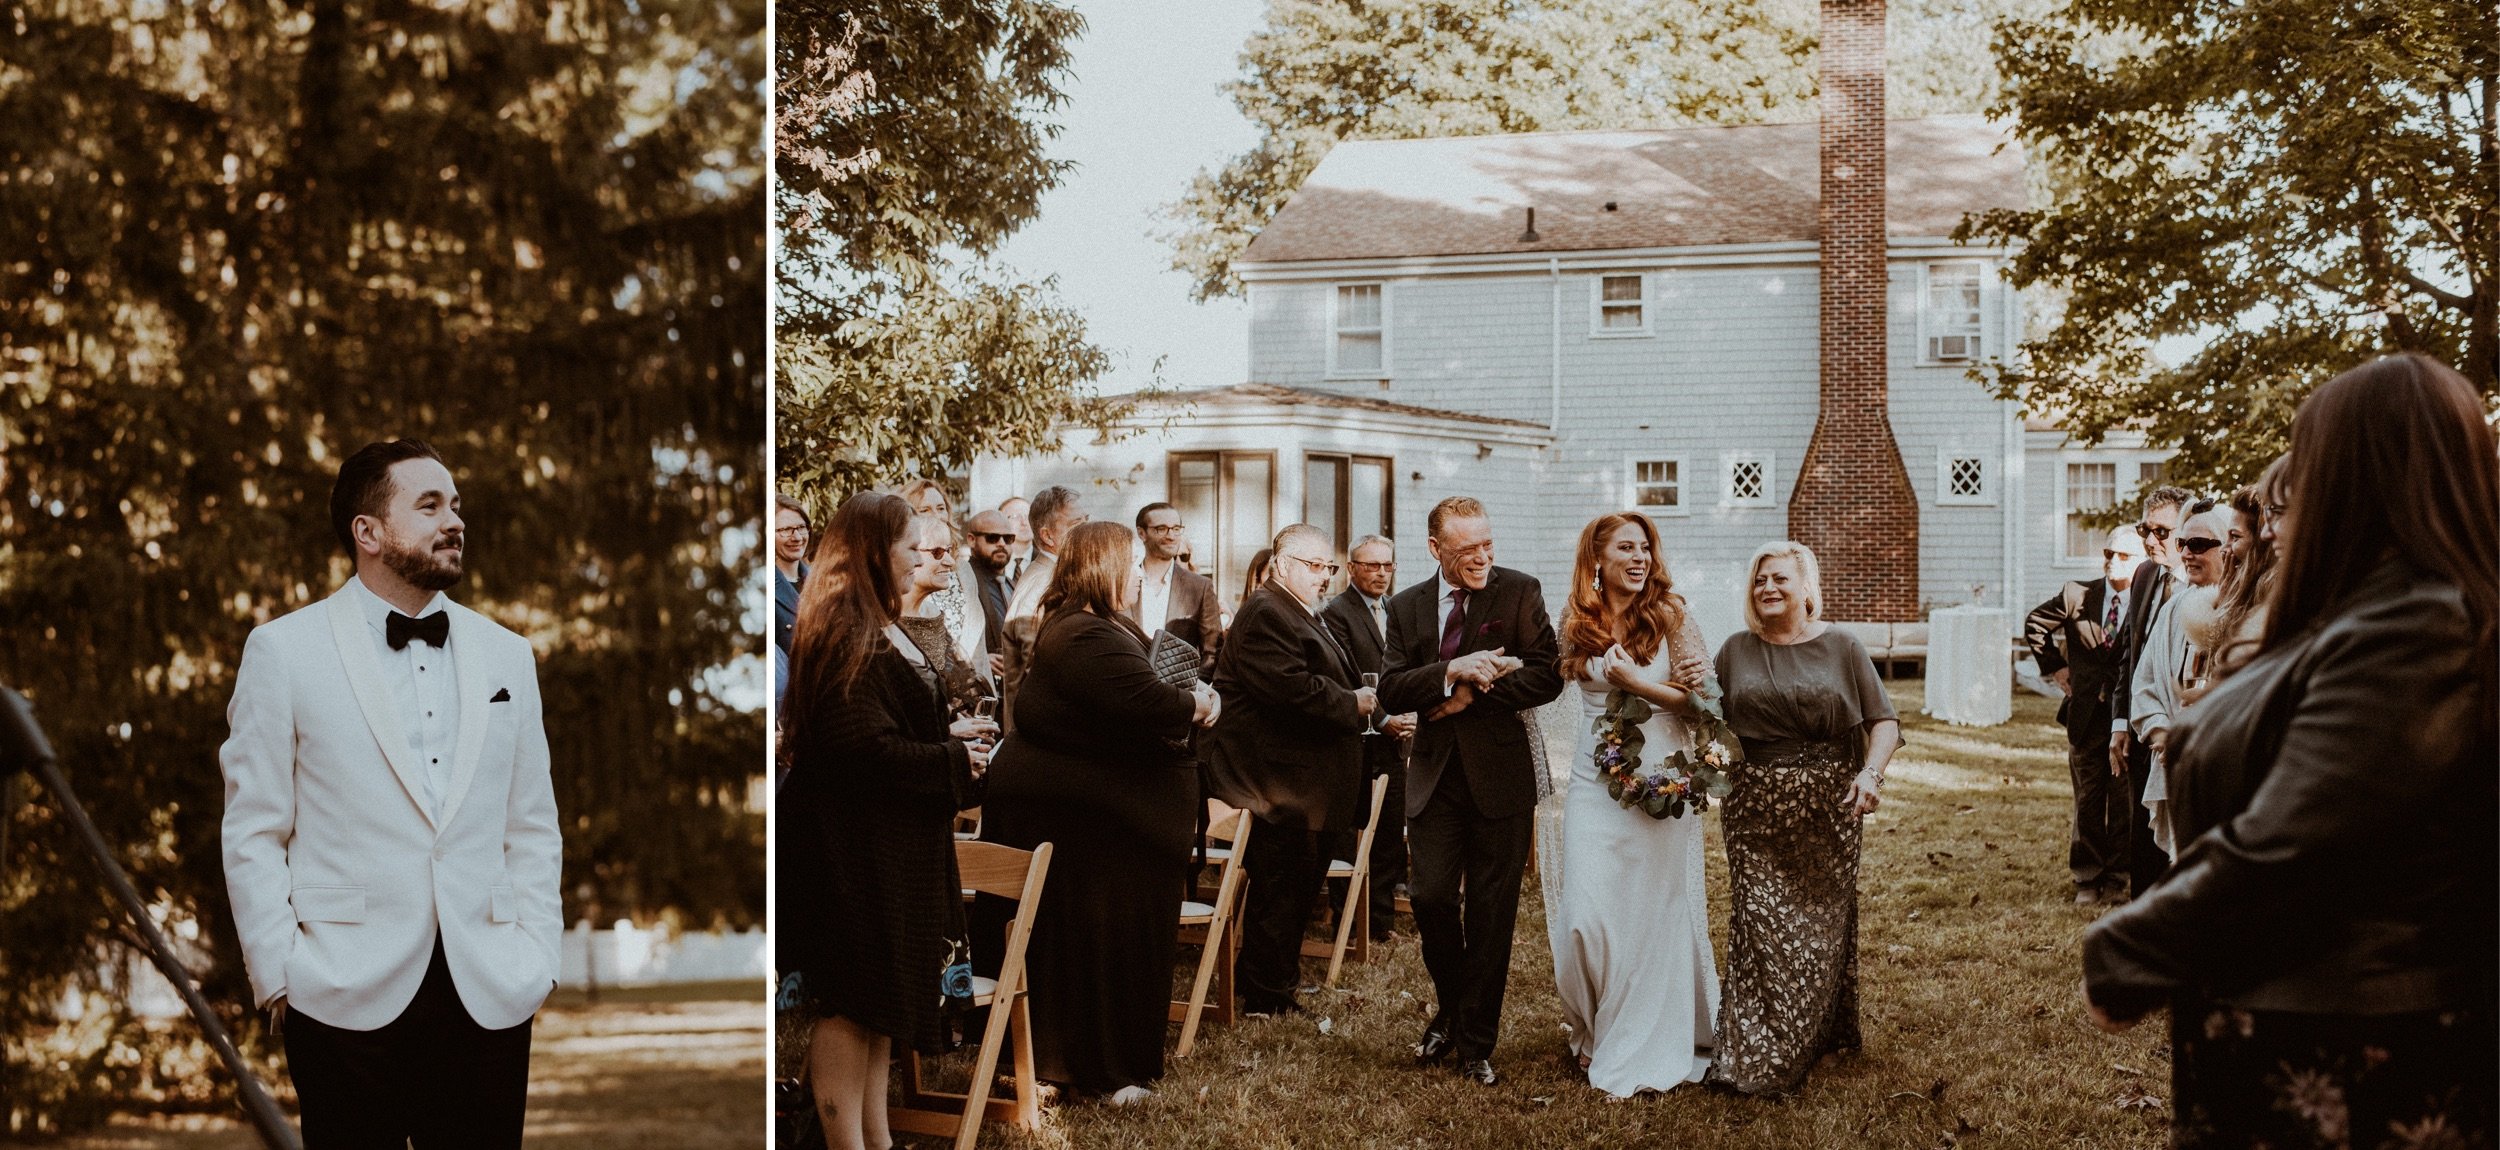 065_Timeless Backyard Wedding in Rhode Island - Vanessa Alves Photography.jpg